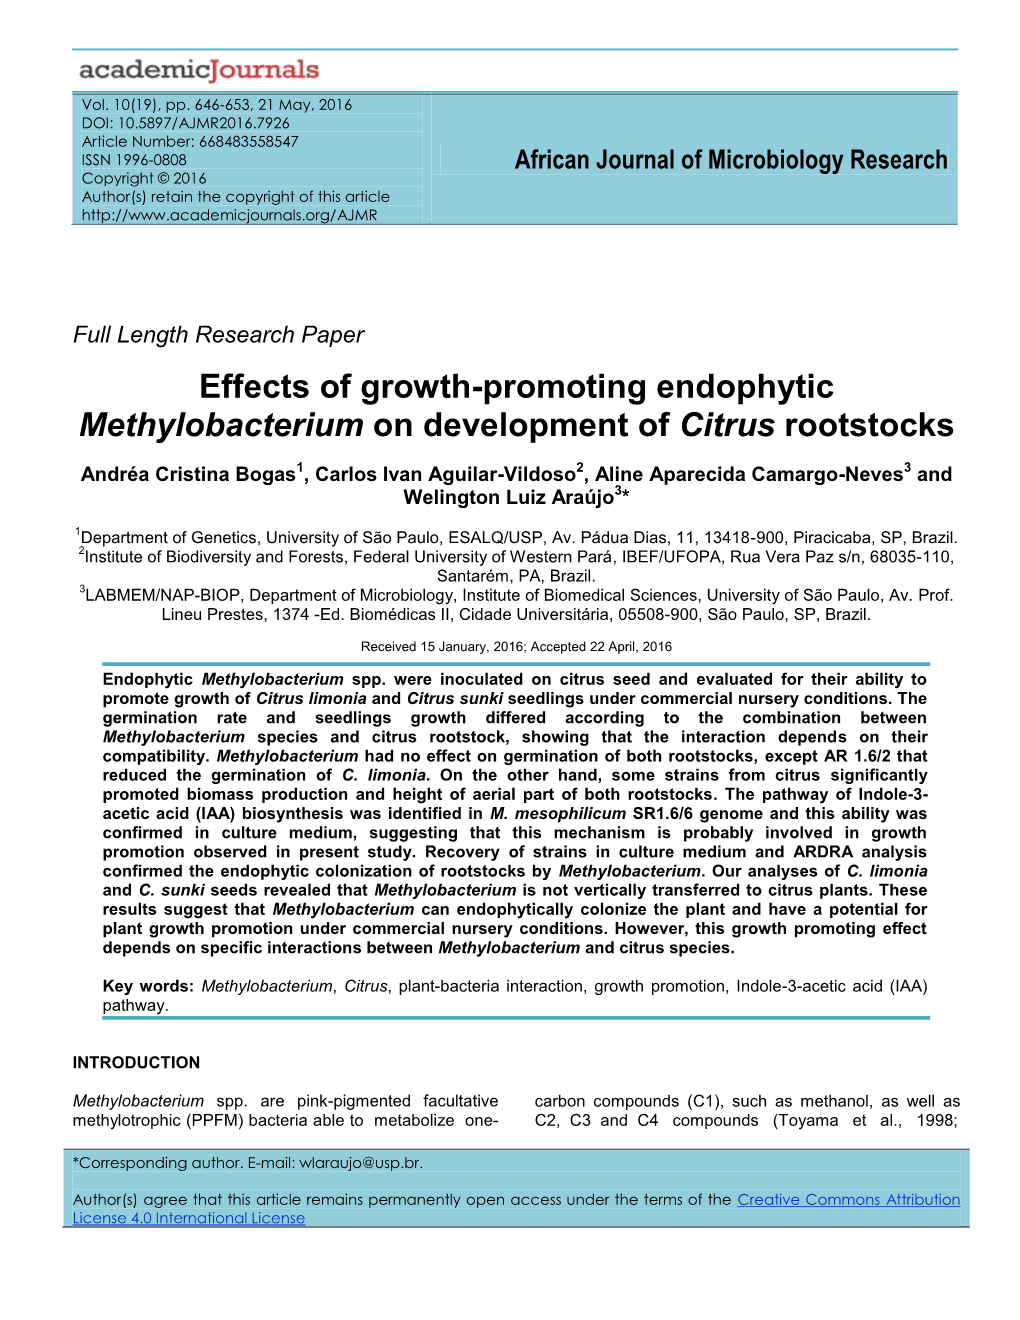 Effects of Growth-Promoting Endophytic Methylobacterium on Development of Citrus Rootstocks